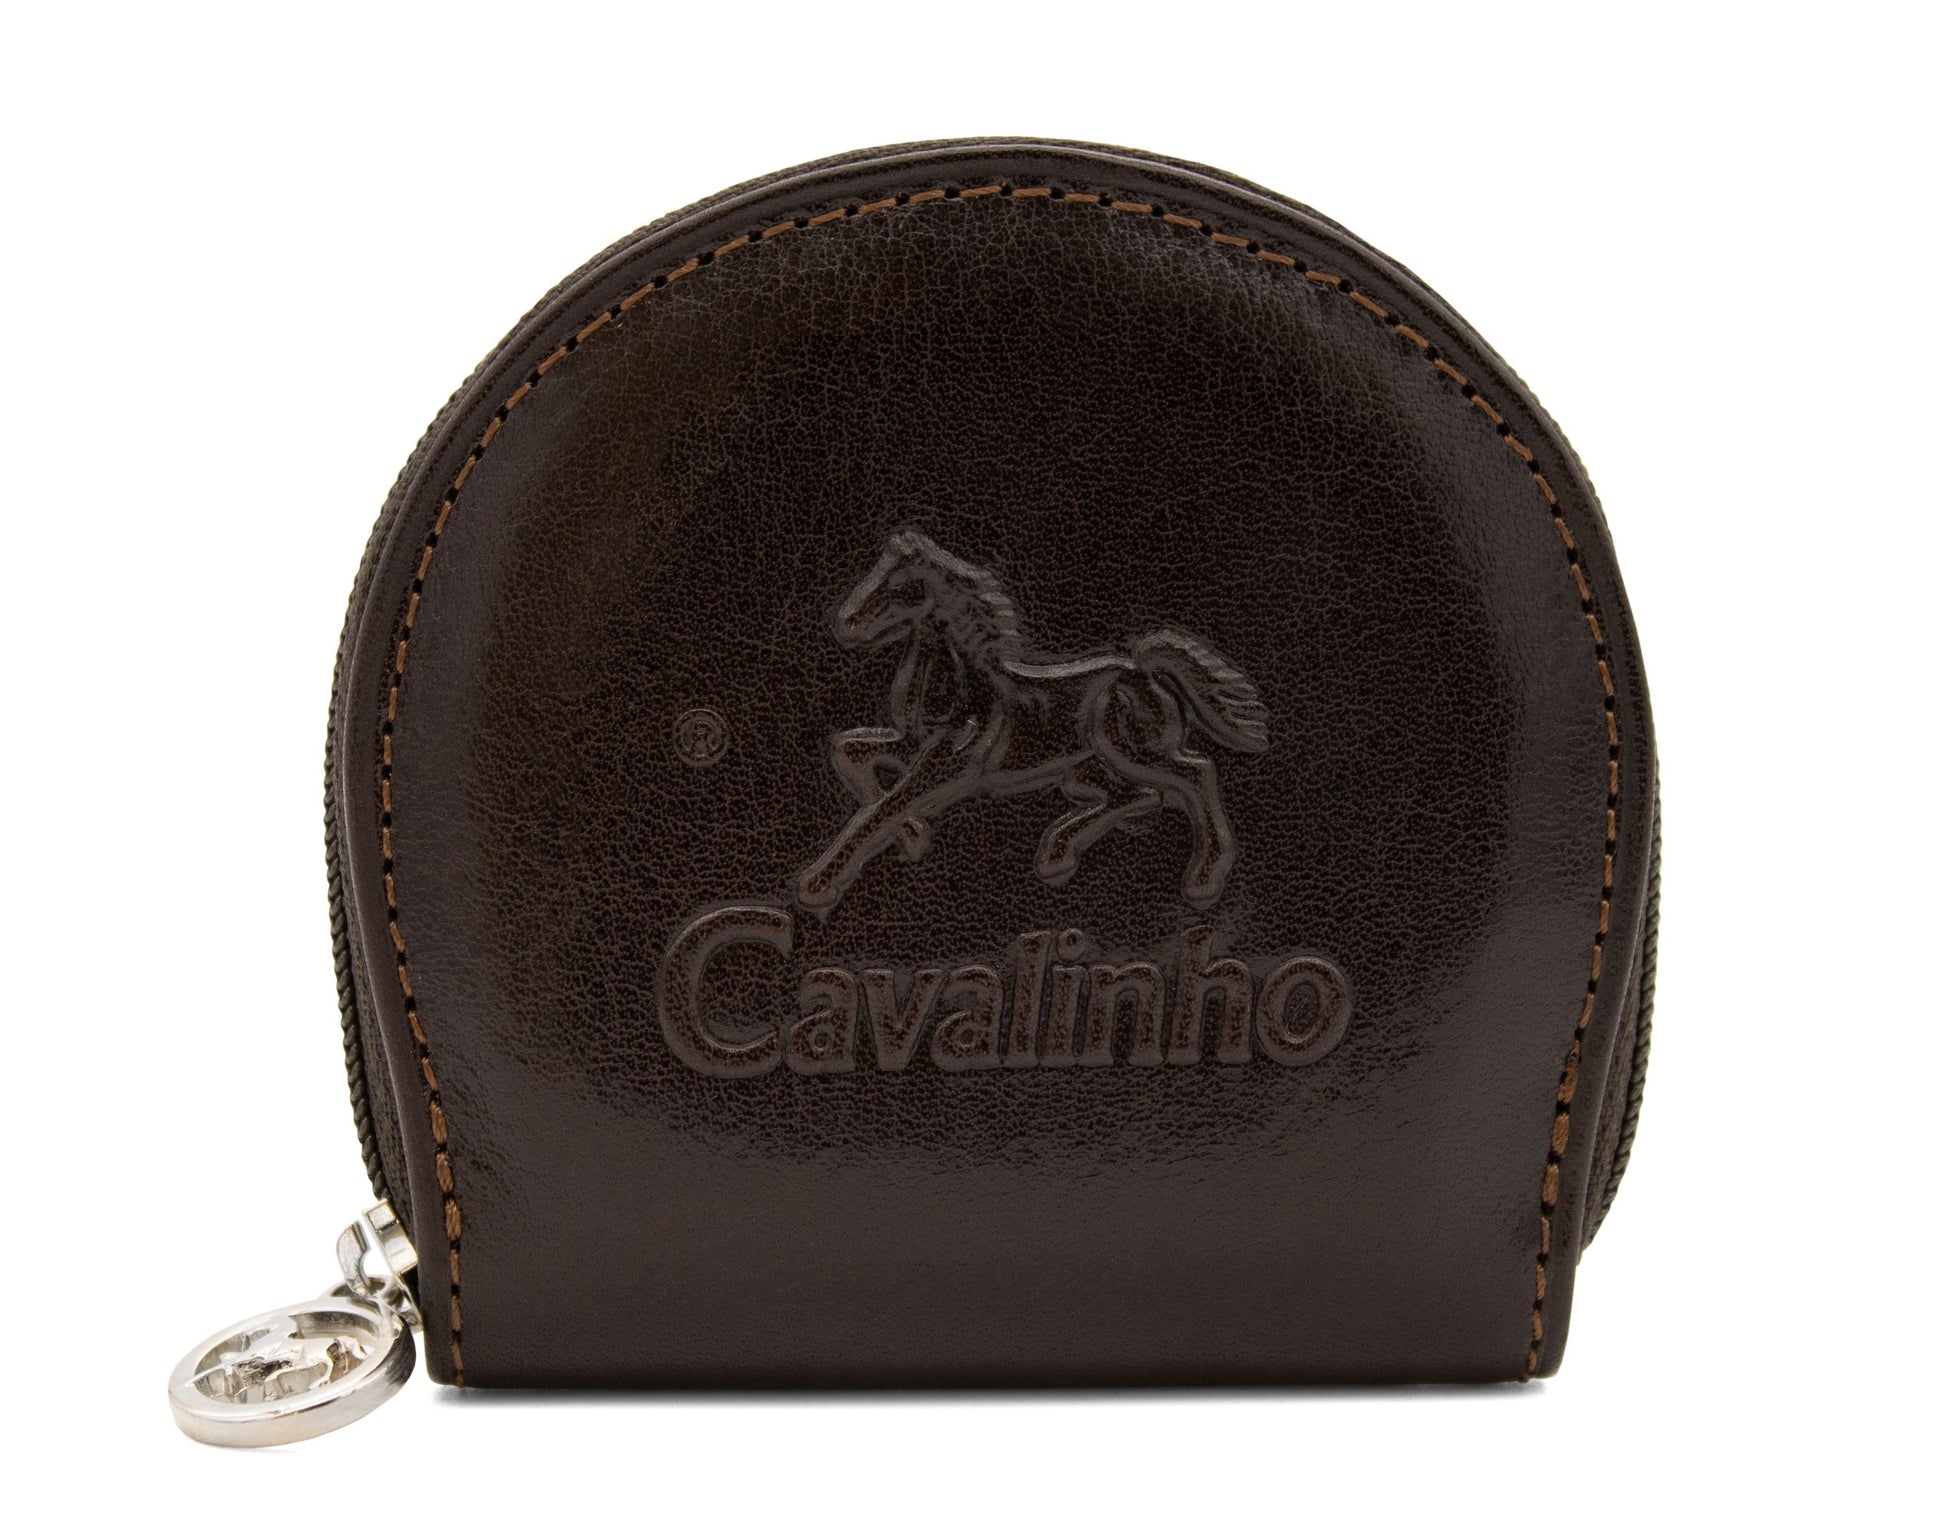 Cavalinho Men's Leather Change Purse - Brown - 28610553.02_1